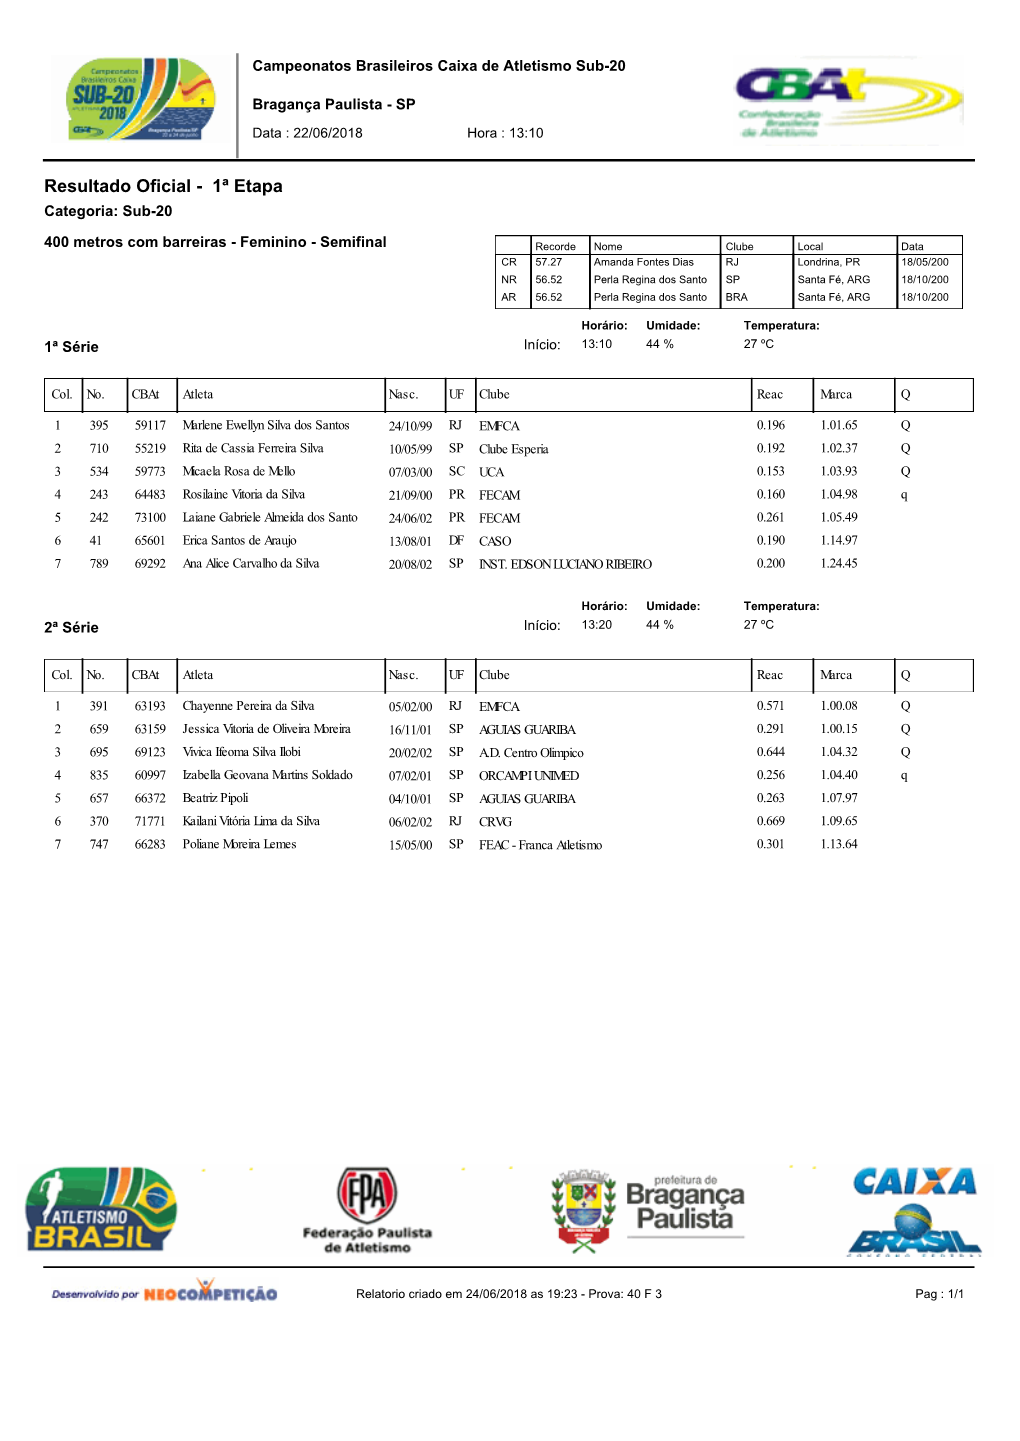 Campeonatos Brasileiros Caixa Sub-20